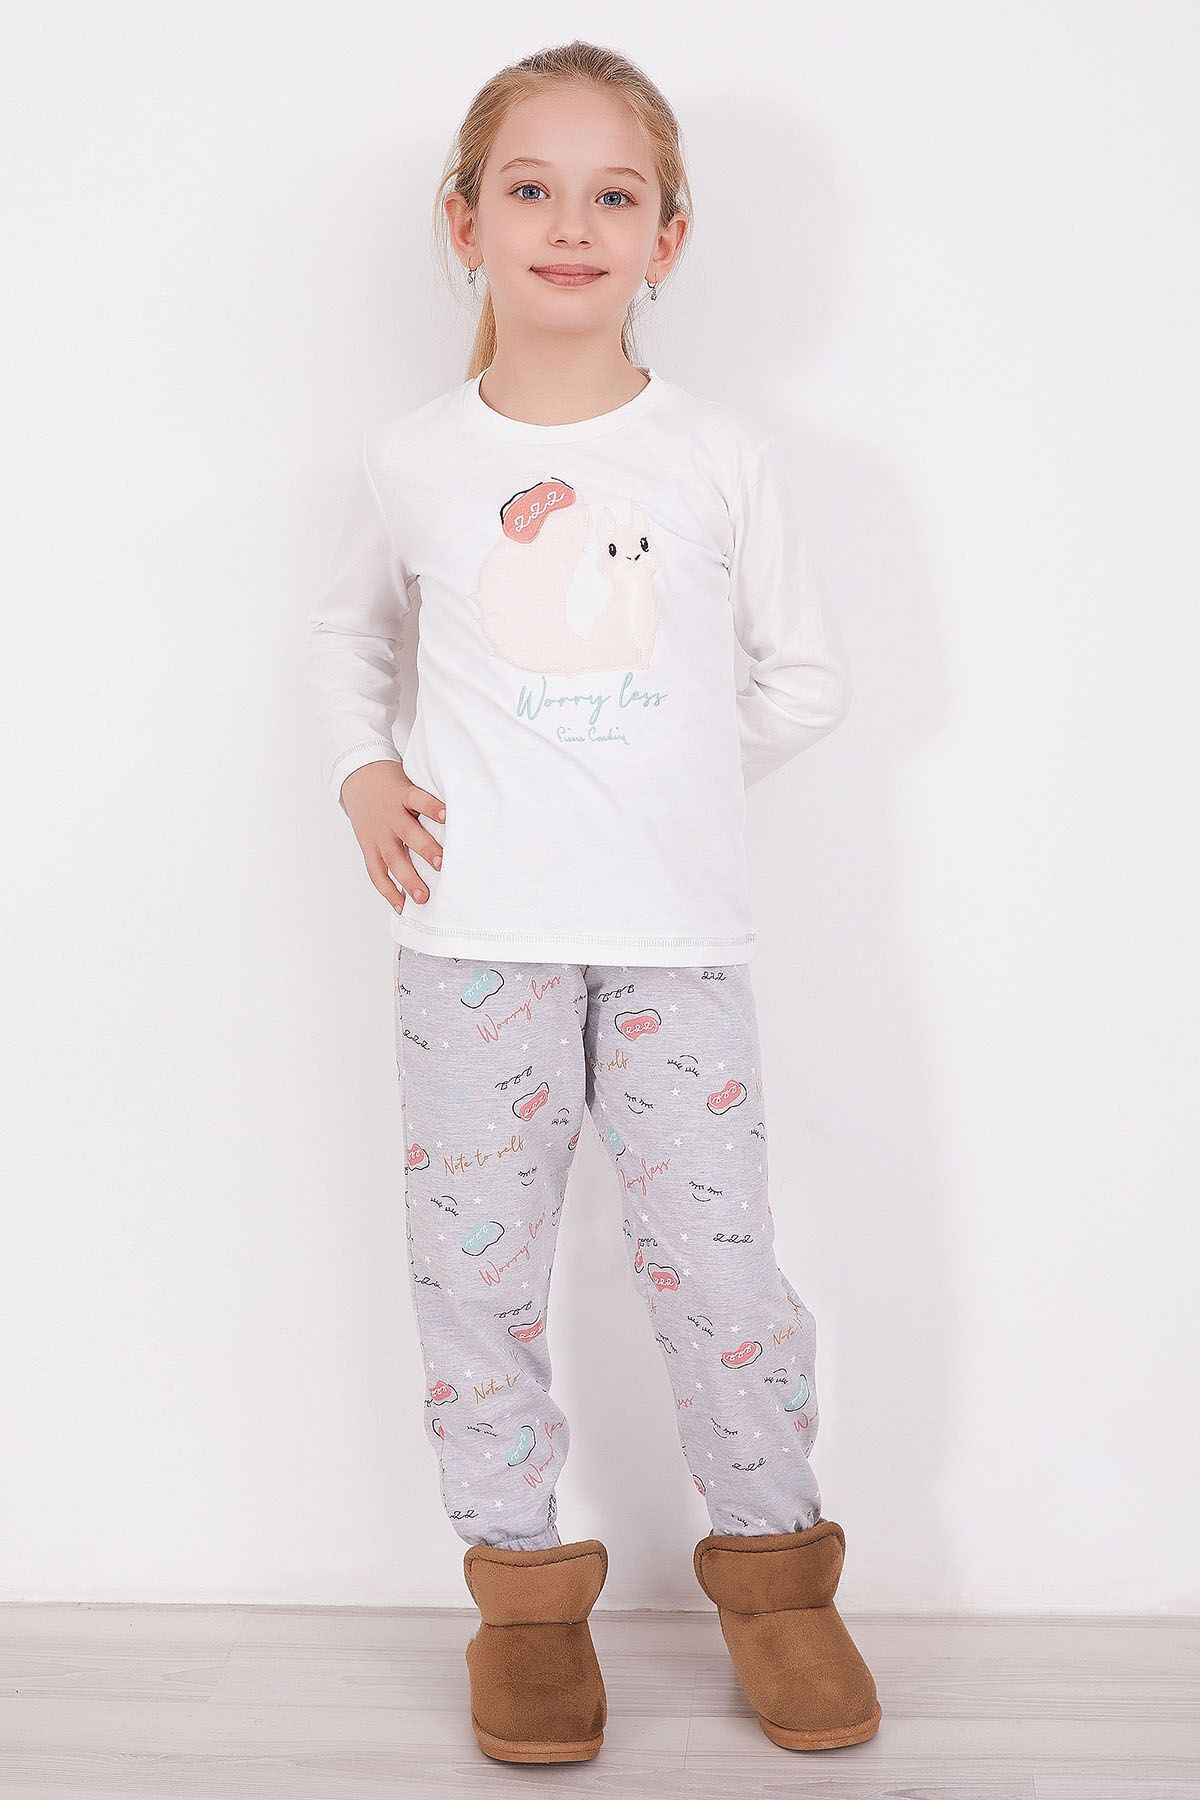 Pierre Cardin دختر مادر ترکیب لباس خواب مجموعه 8400 (قیمت و دختران متفاوت است)